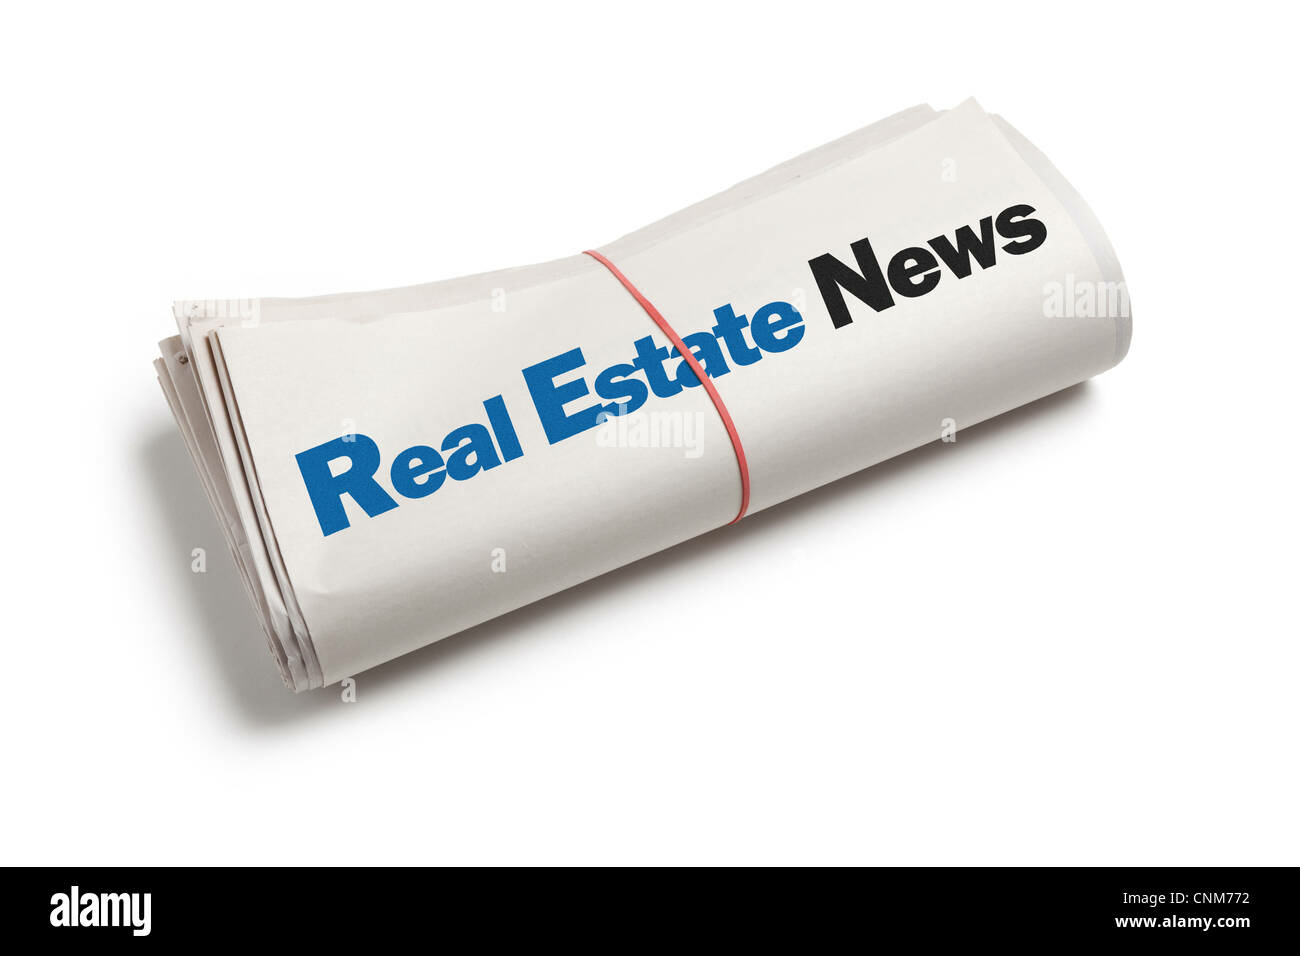 Real estate transfers | News | duboiscountyherald.com